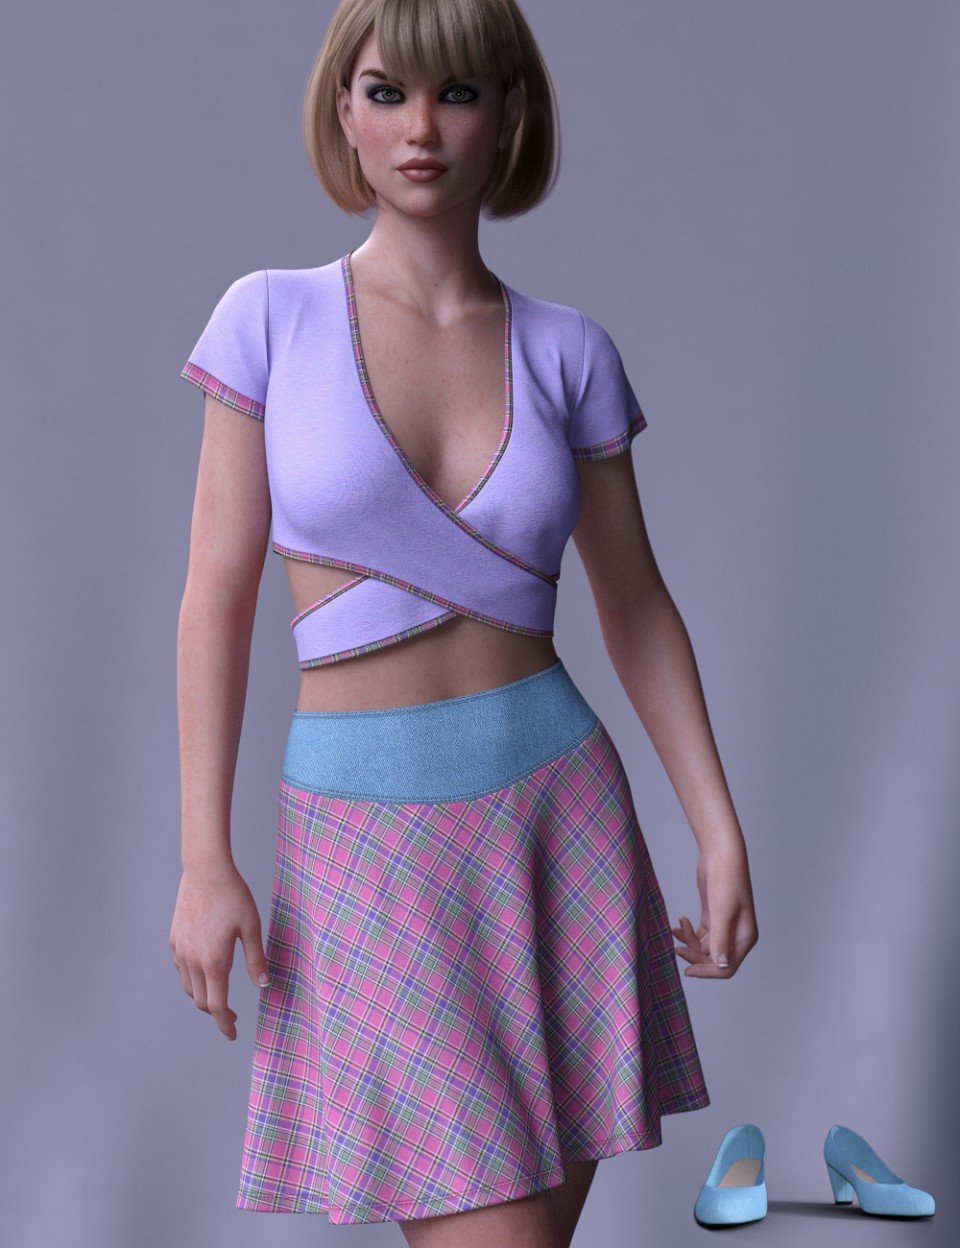 dForce Brazen Charm Outfit for Genesis 8 Female(s)_DAZ3D下载站